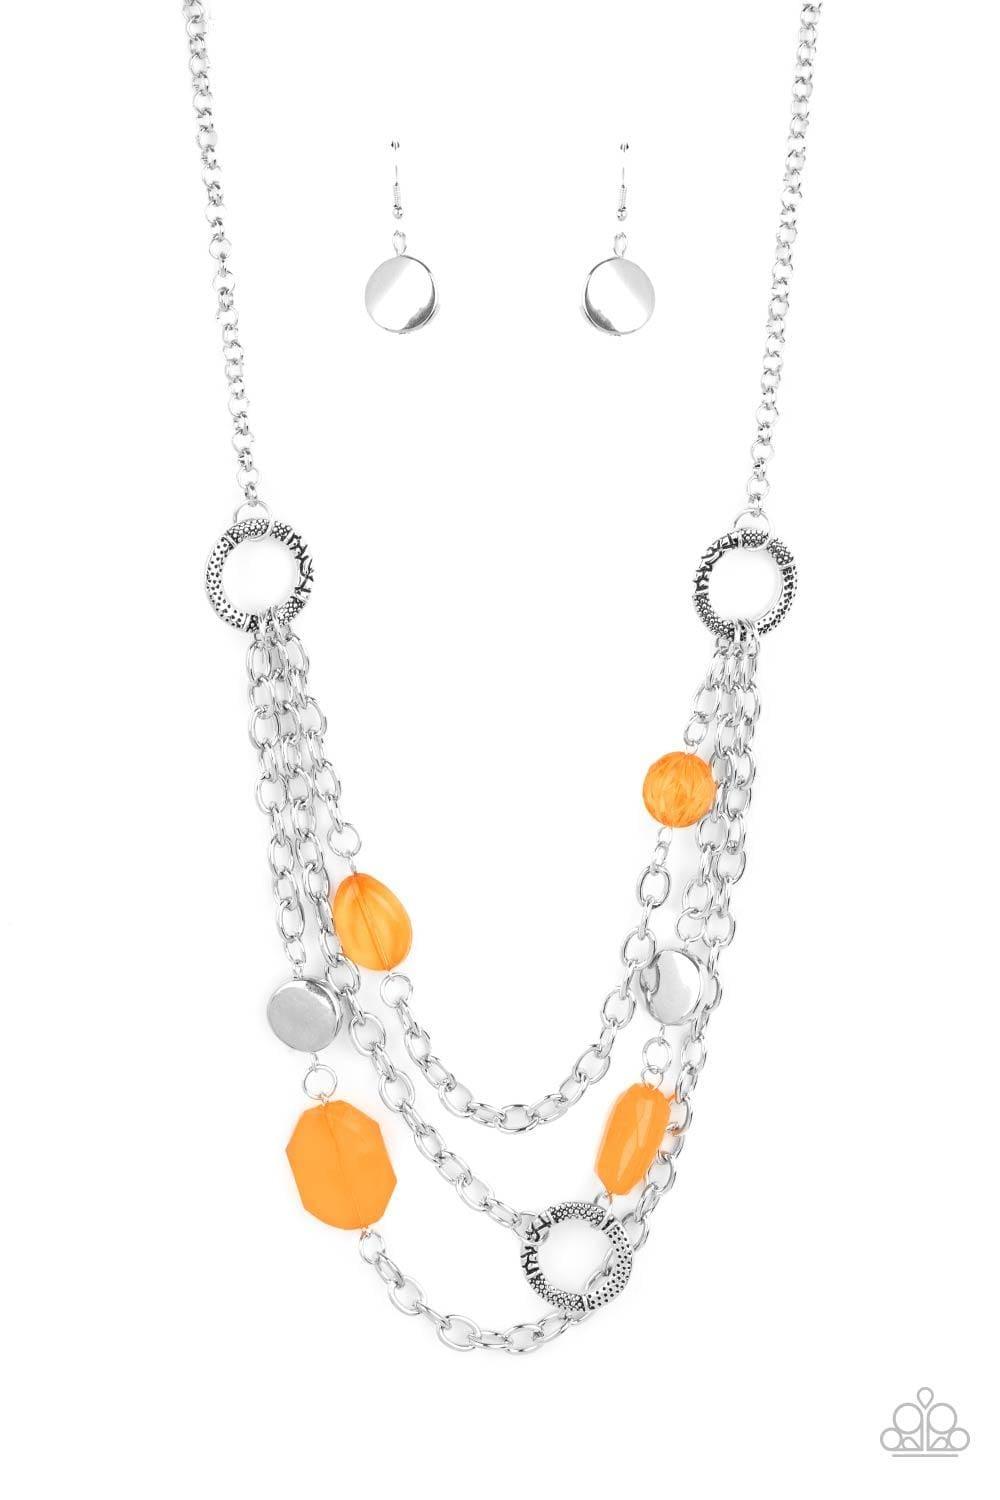 Paparazzi Accessories - Oceanside Spa - Orange Necklace - Bling by JessieK